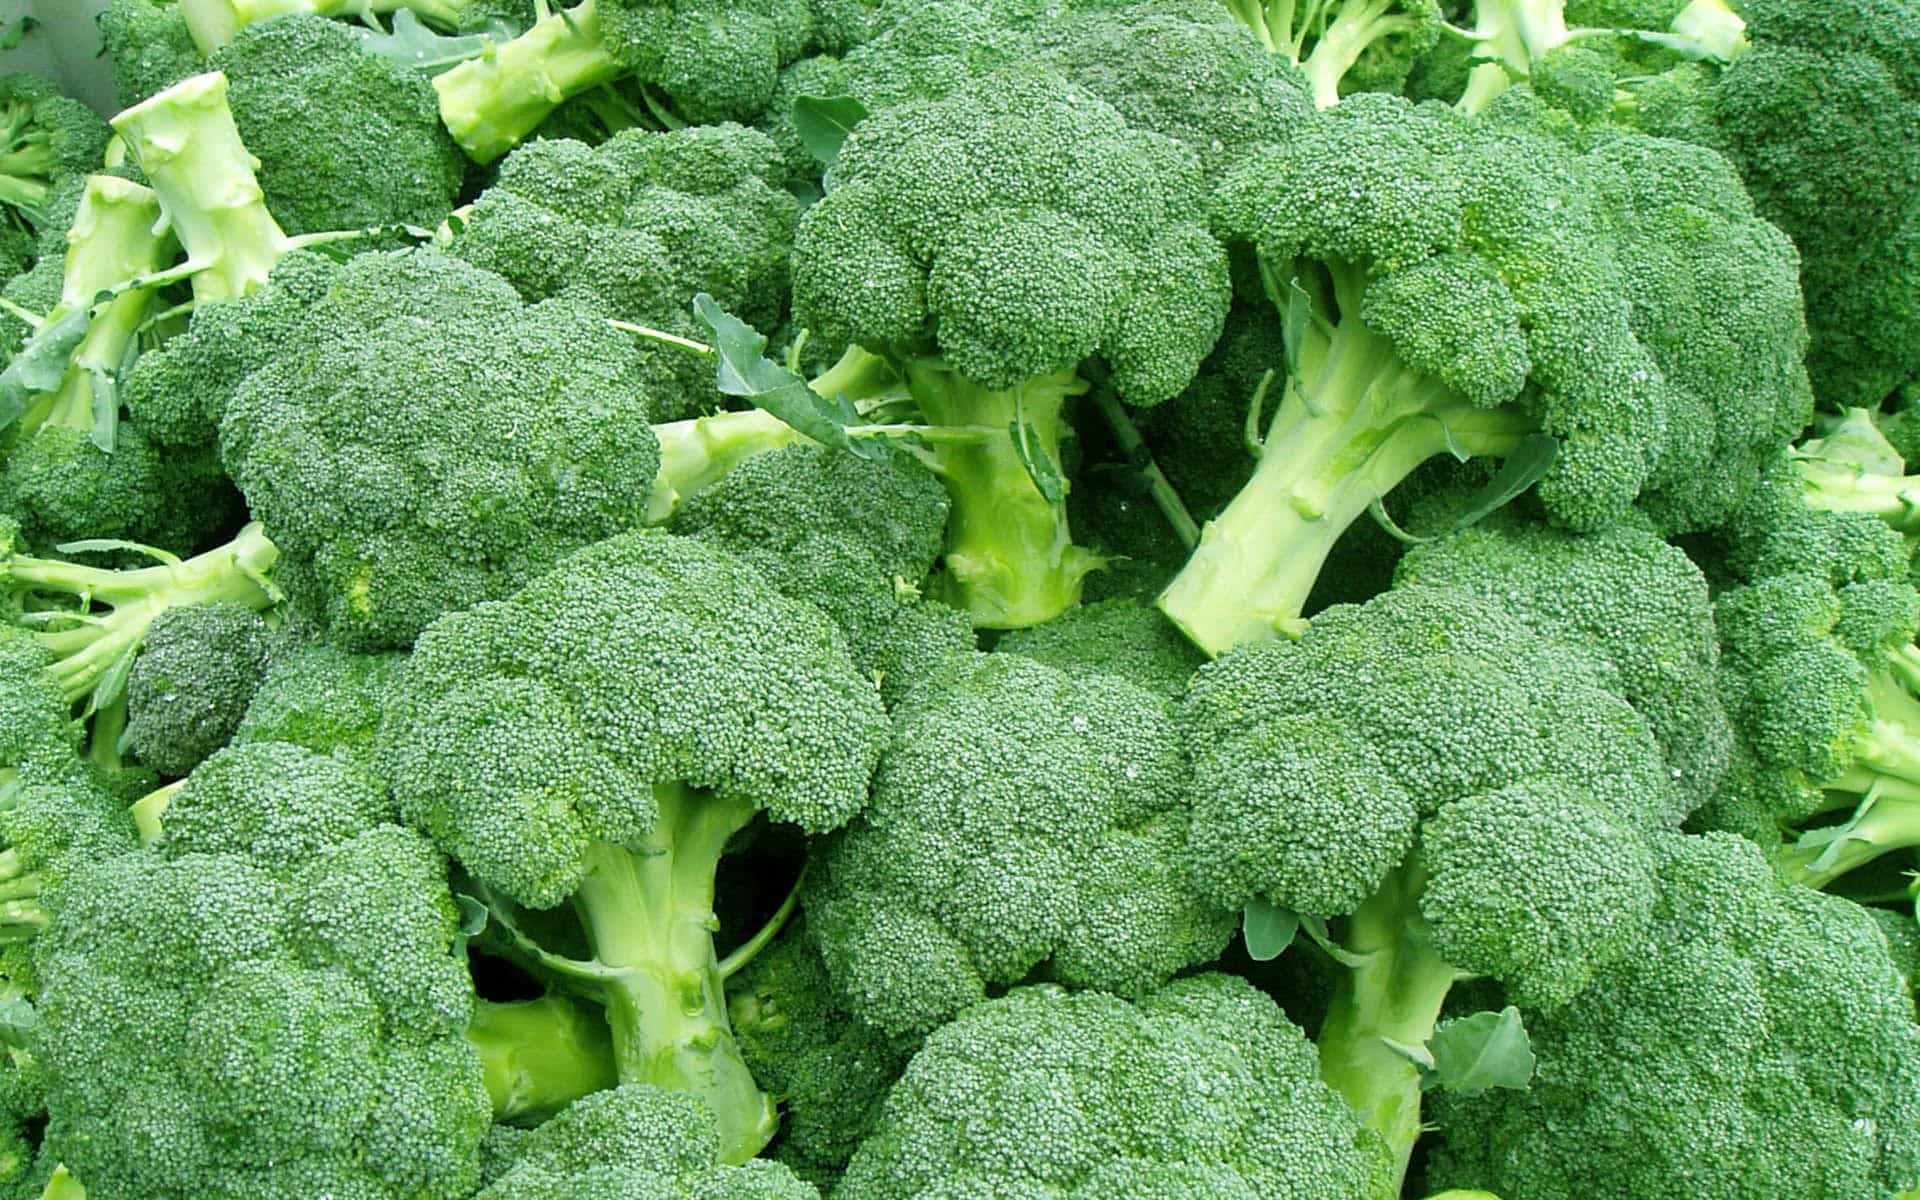 Heat-tolerant broccoli